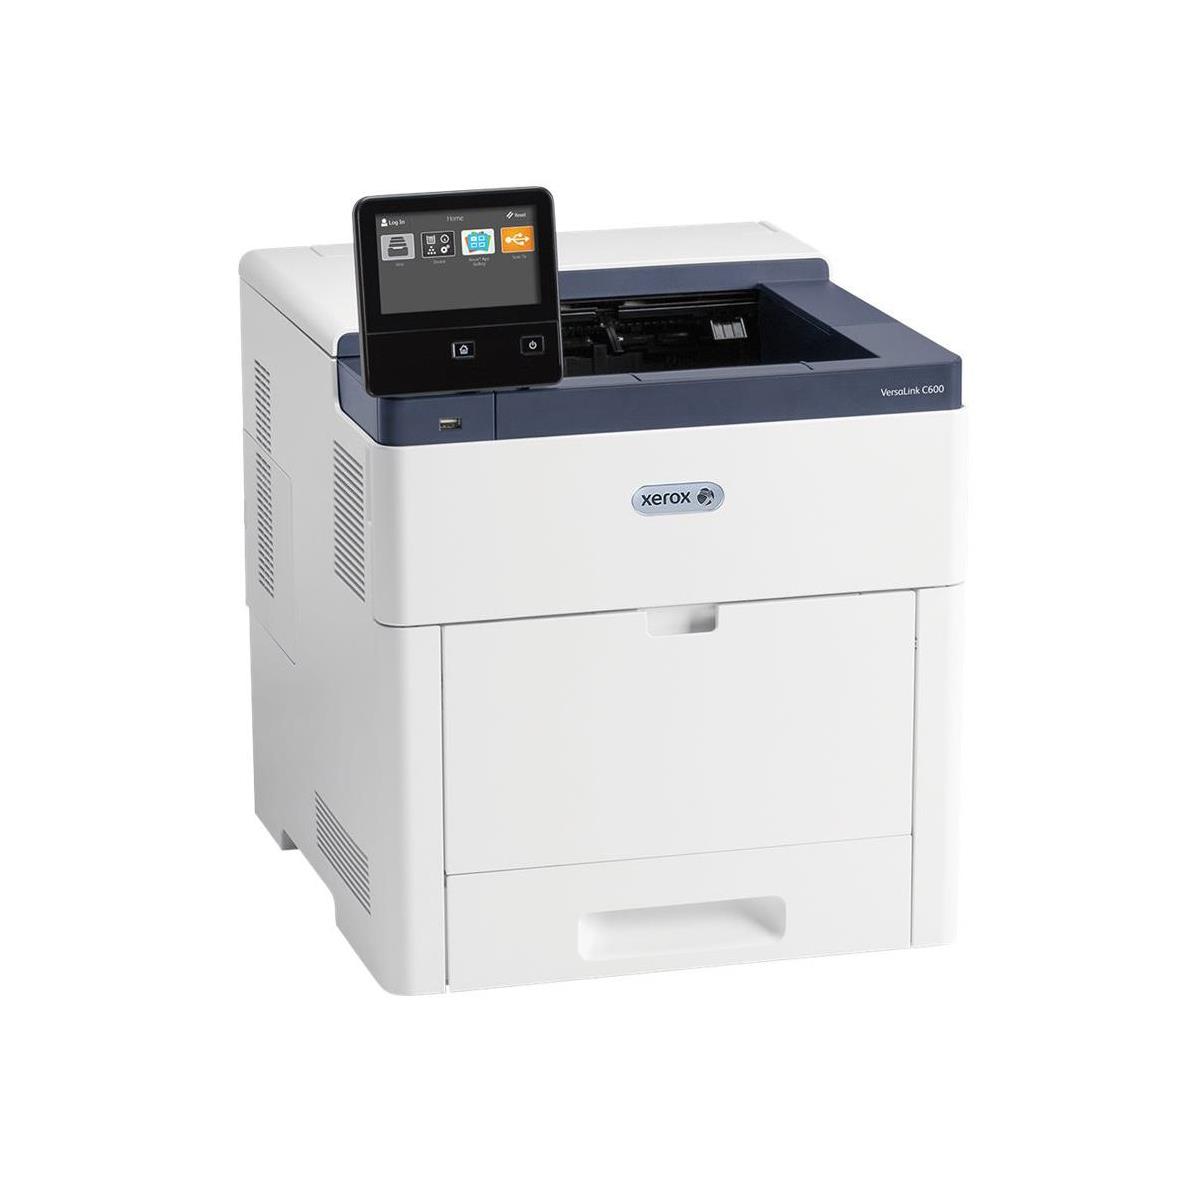 

Xerox VersaLink C600/DX Color Laser Printer with Sheet 2000 Feeder, Duplex Print